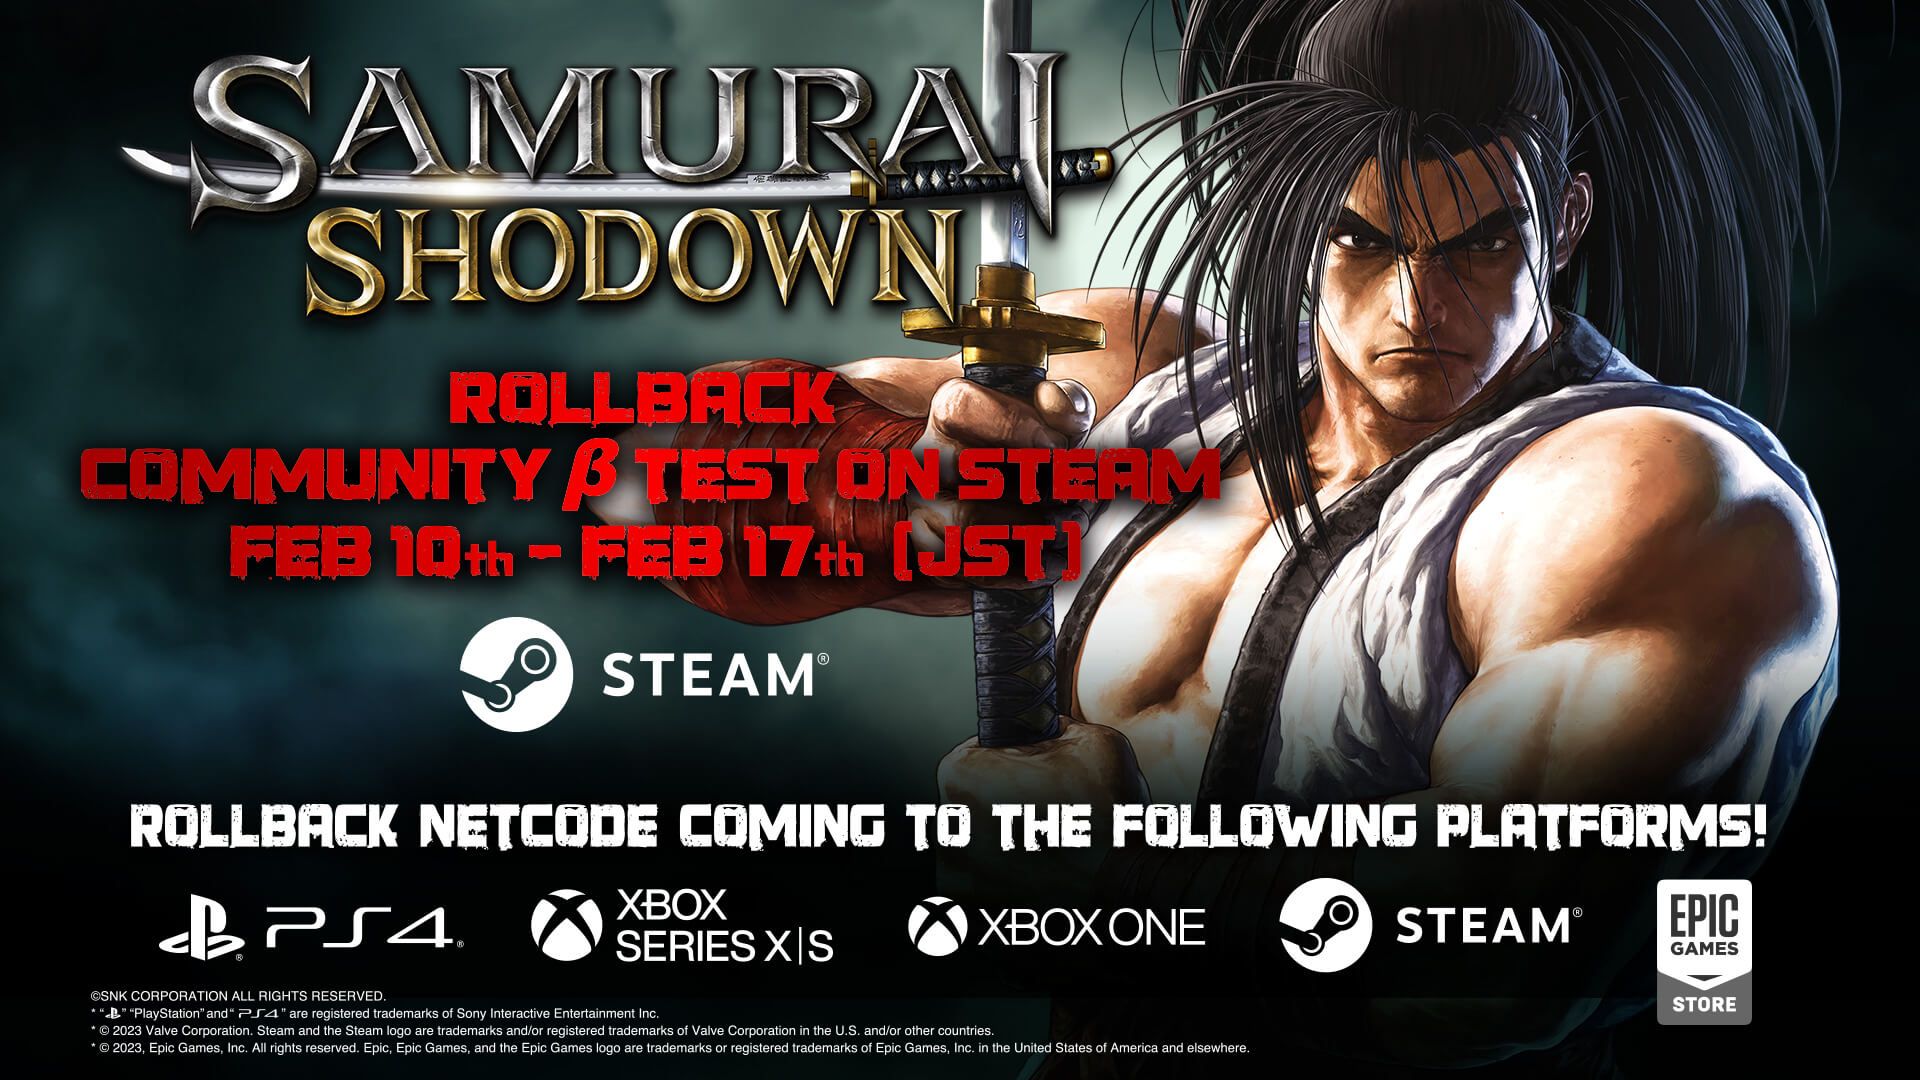 Samurai Shodown Rollback Netcode Steam Beta Test Begins February 10th